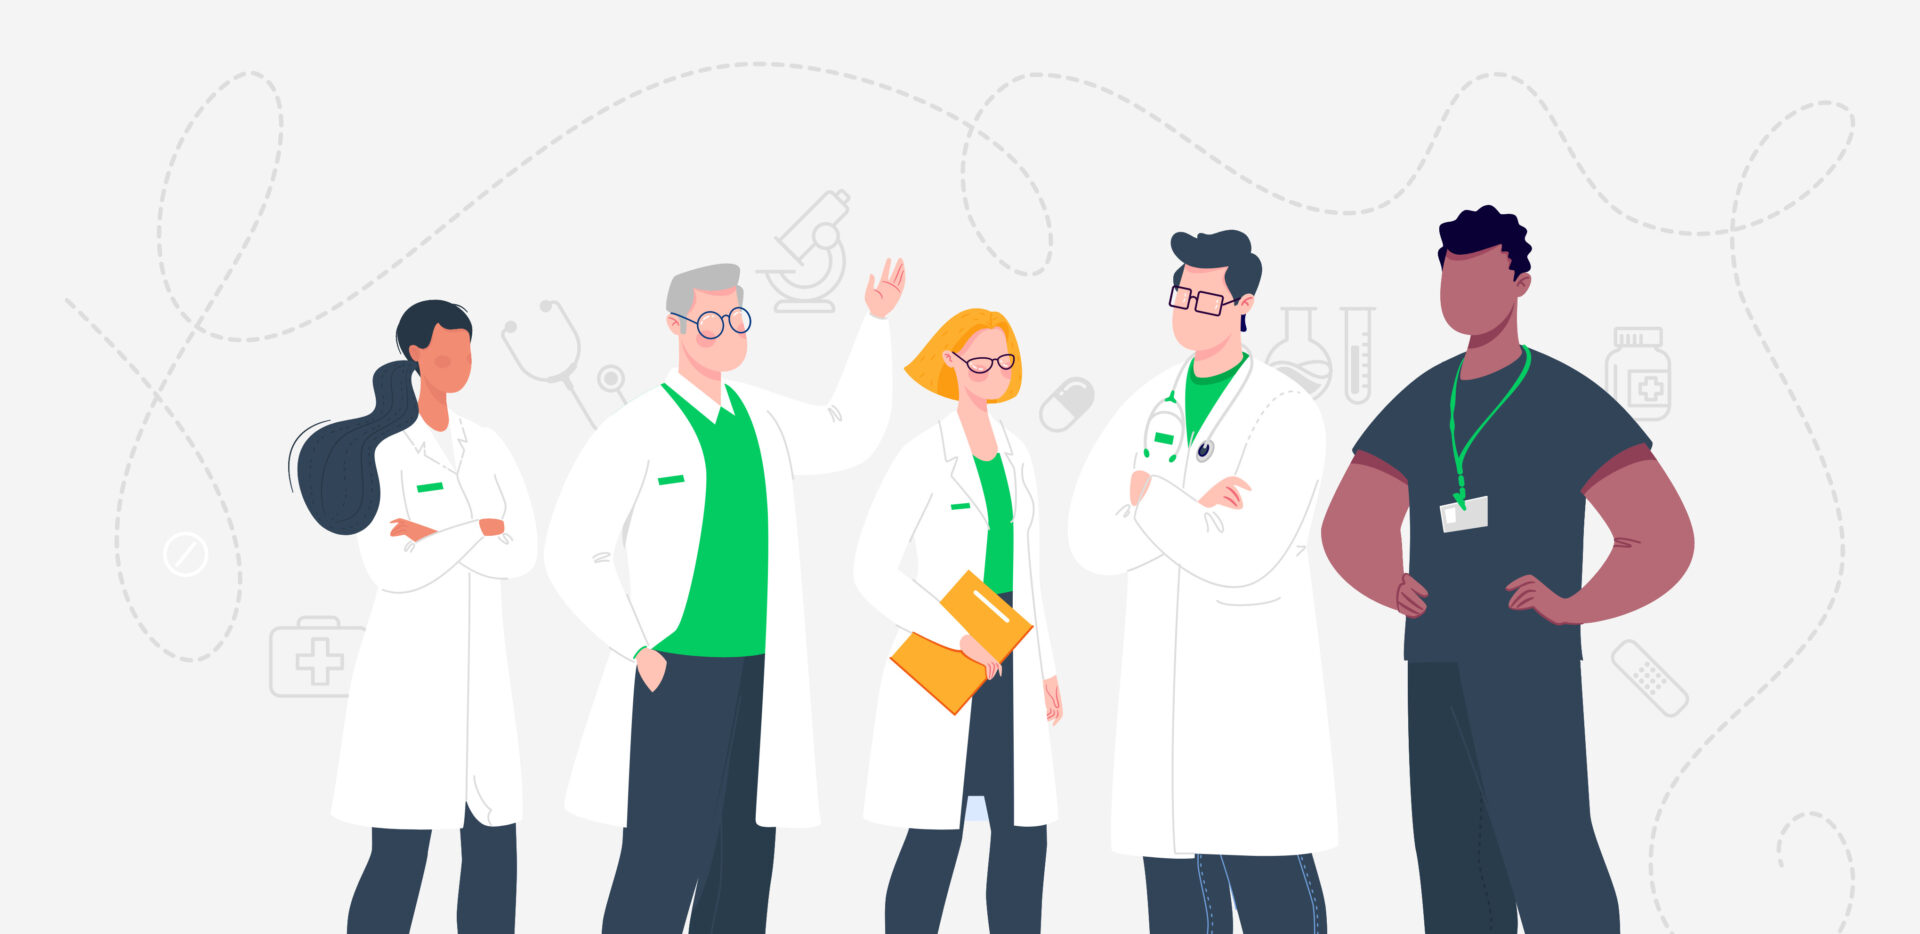 Illustration of 5 different doctors